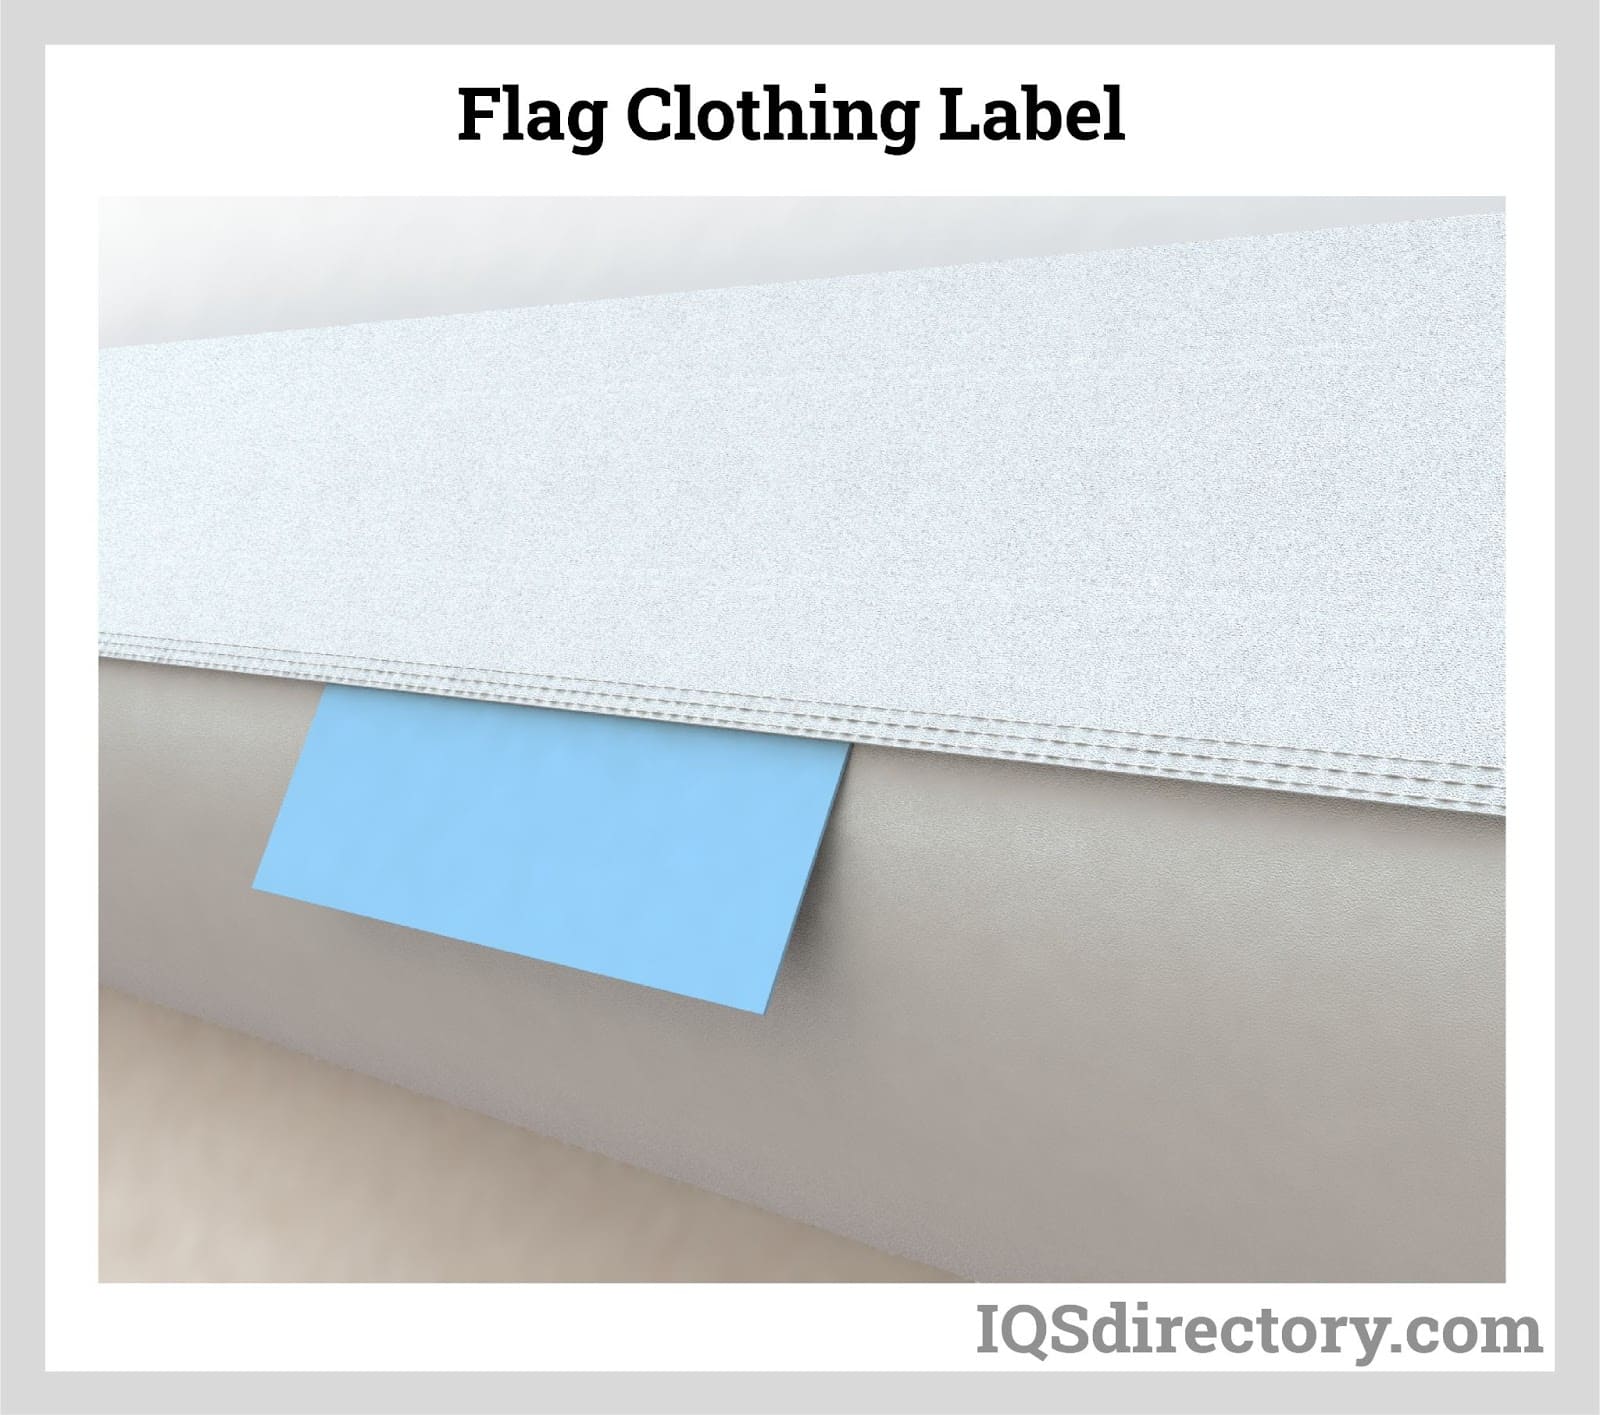 Flag Clothing Label